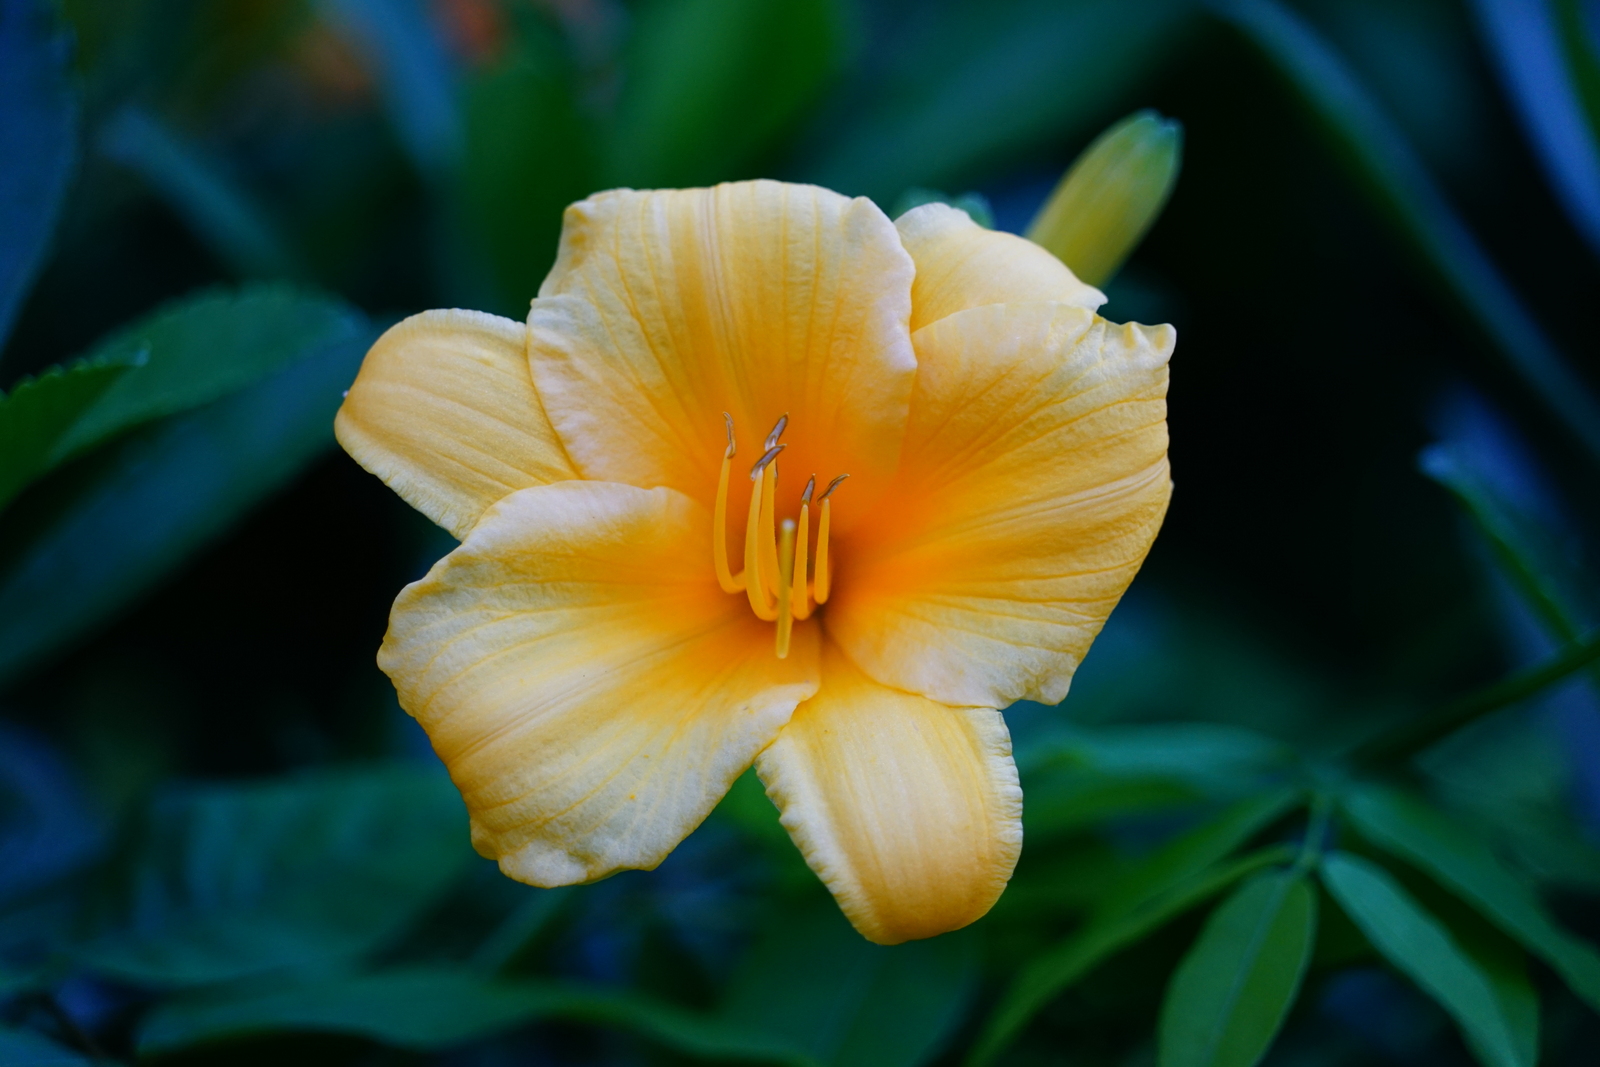 Anura Guruge Sony a7 II Barnstead yellow lily flower July 2017 New Hampshire